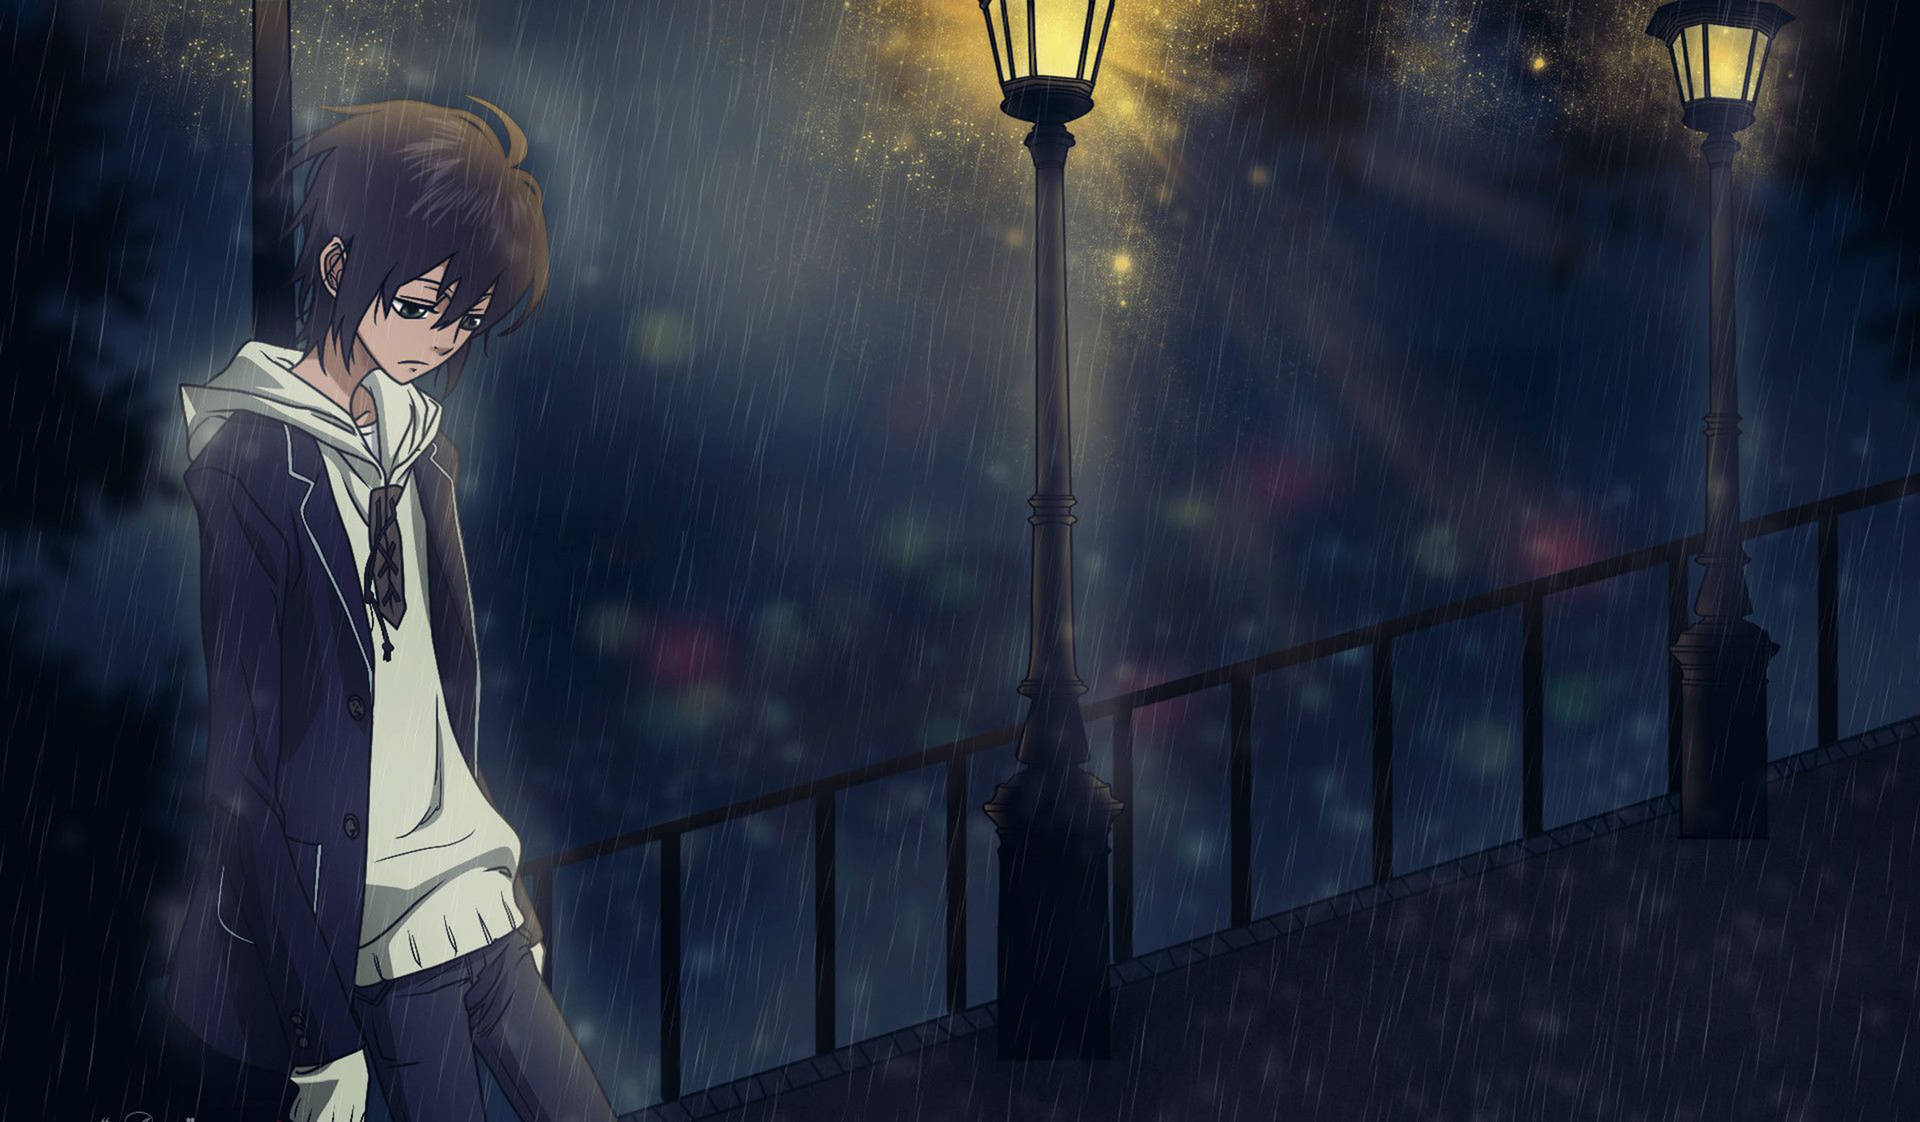 Sad Aesthetic Anime Boy Wallpaper